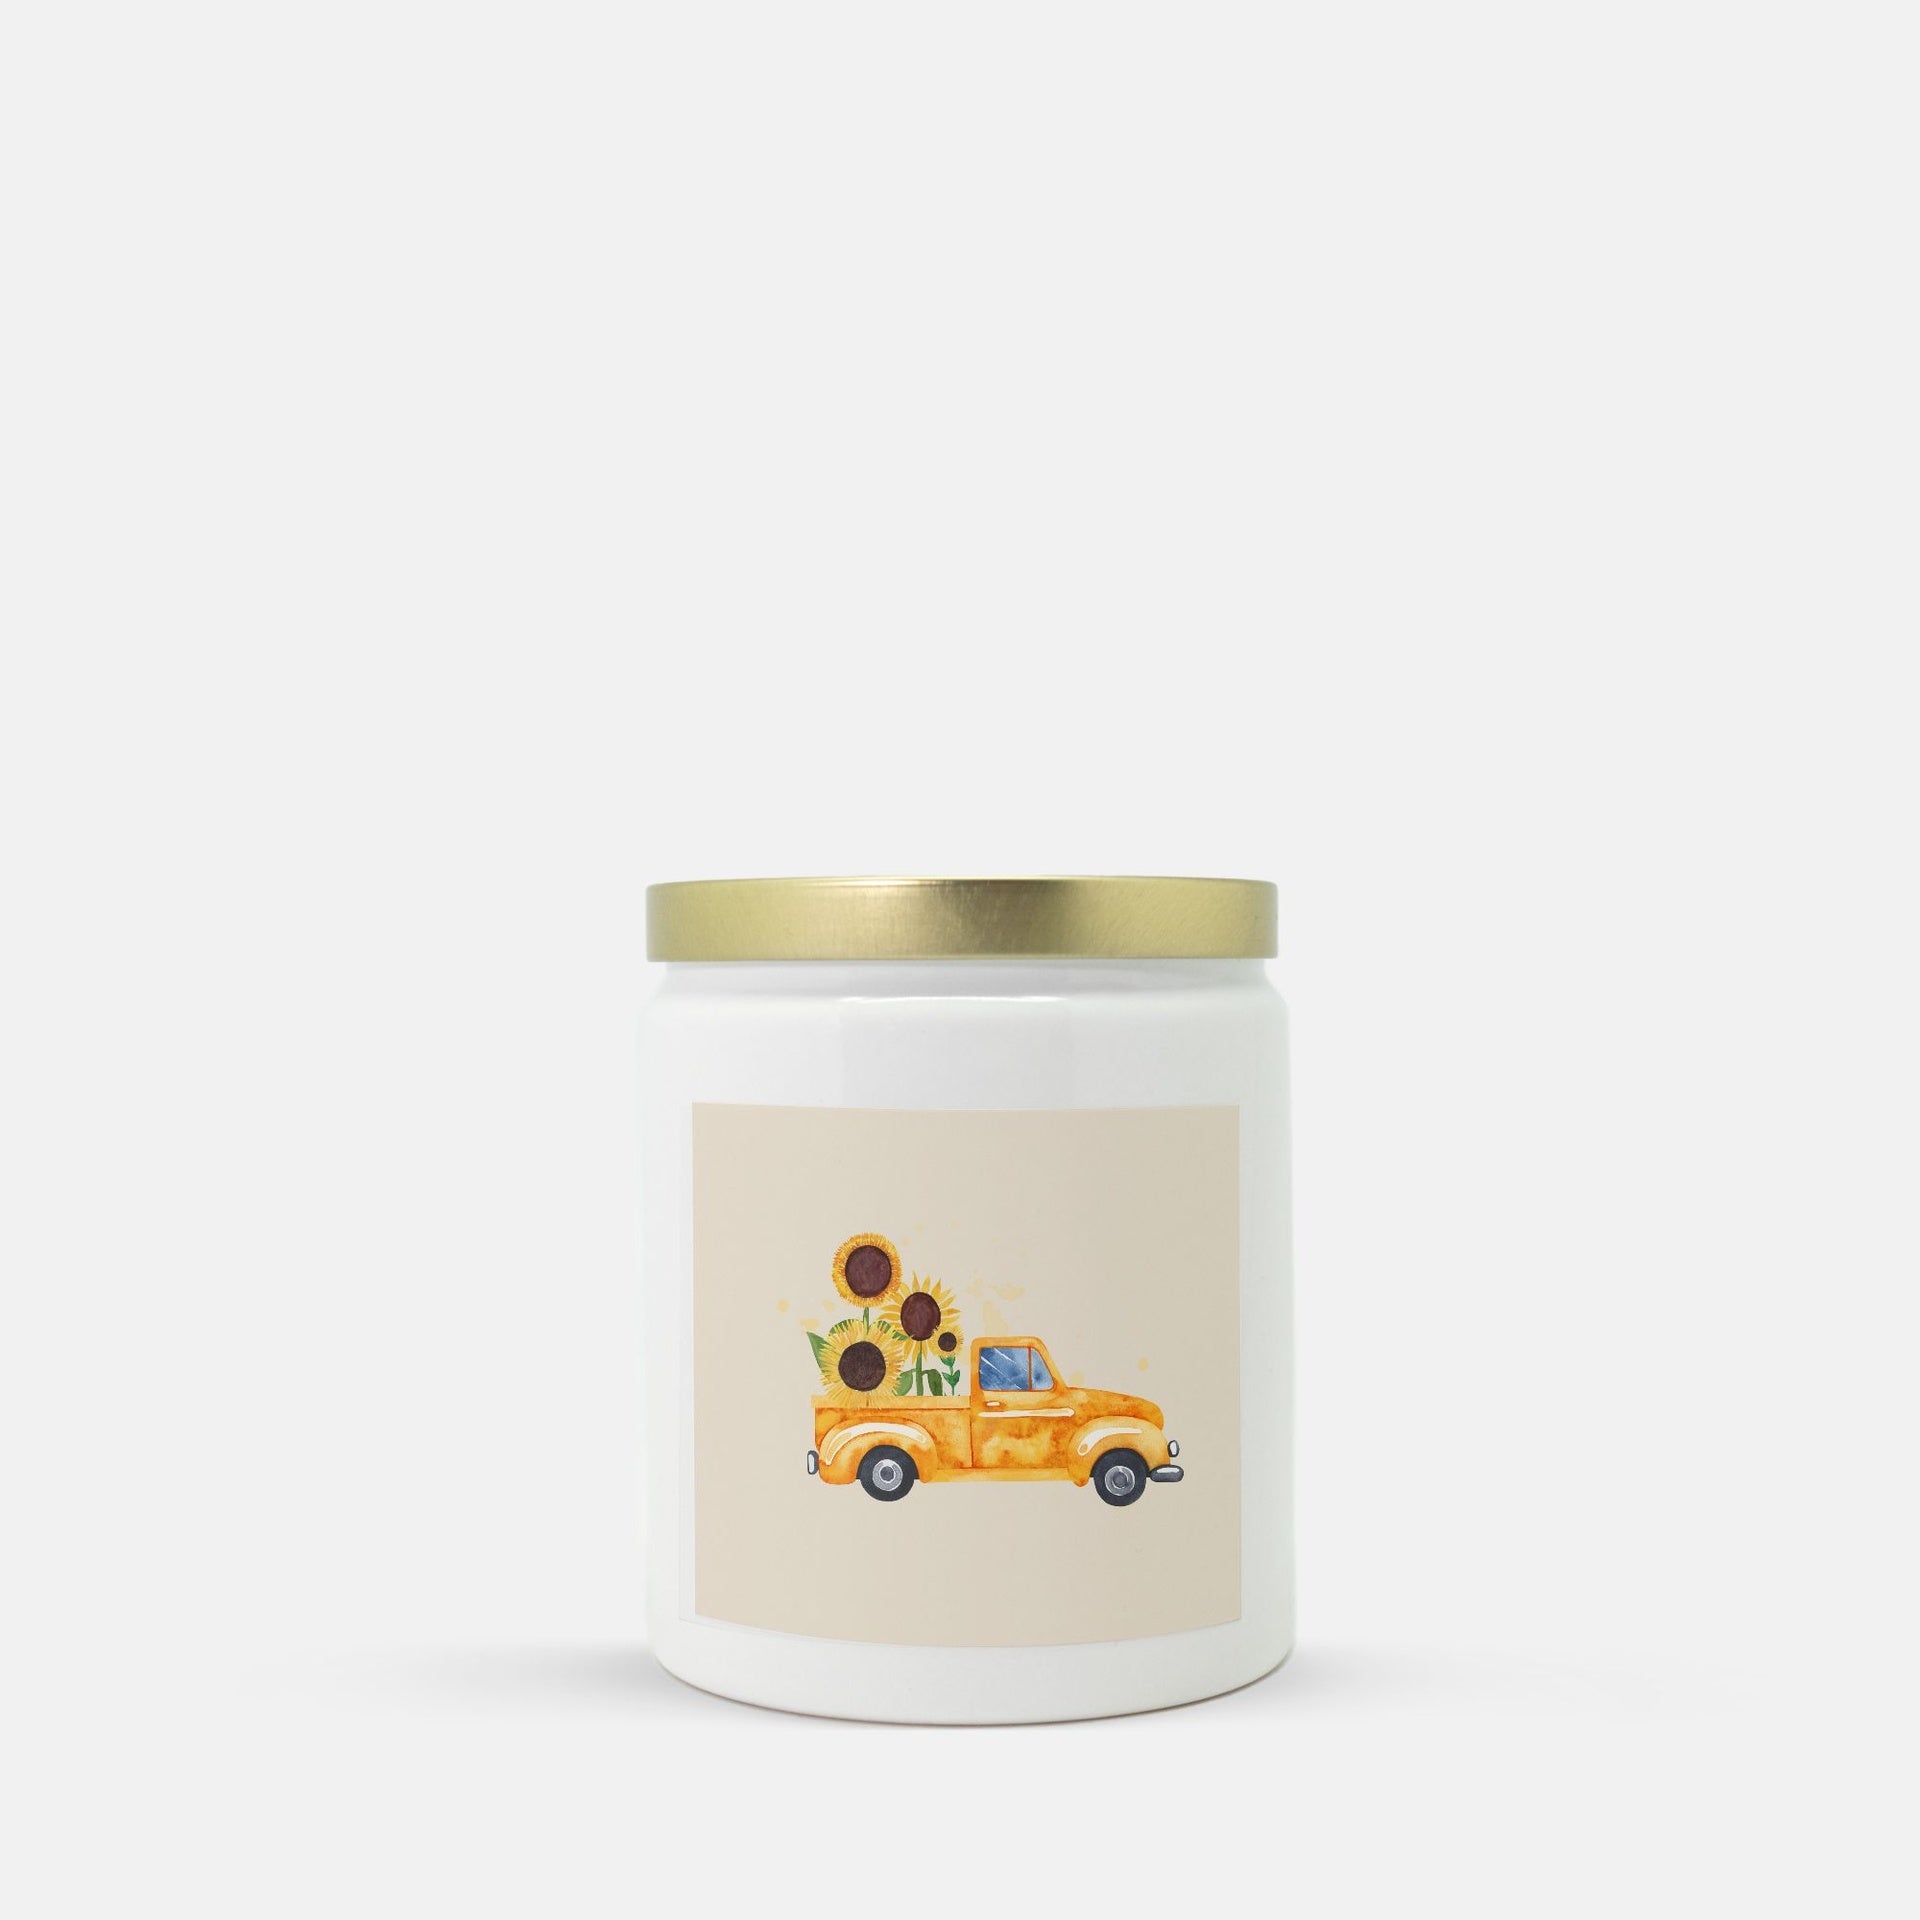 Lifestyle Details - Orange Rustic Truck & Sunflowers Ceramic Candle w Gold Lid - Vanilla Bean